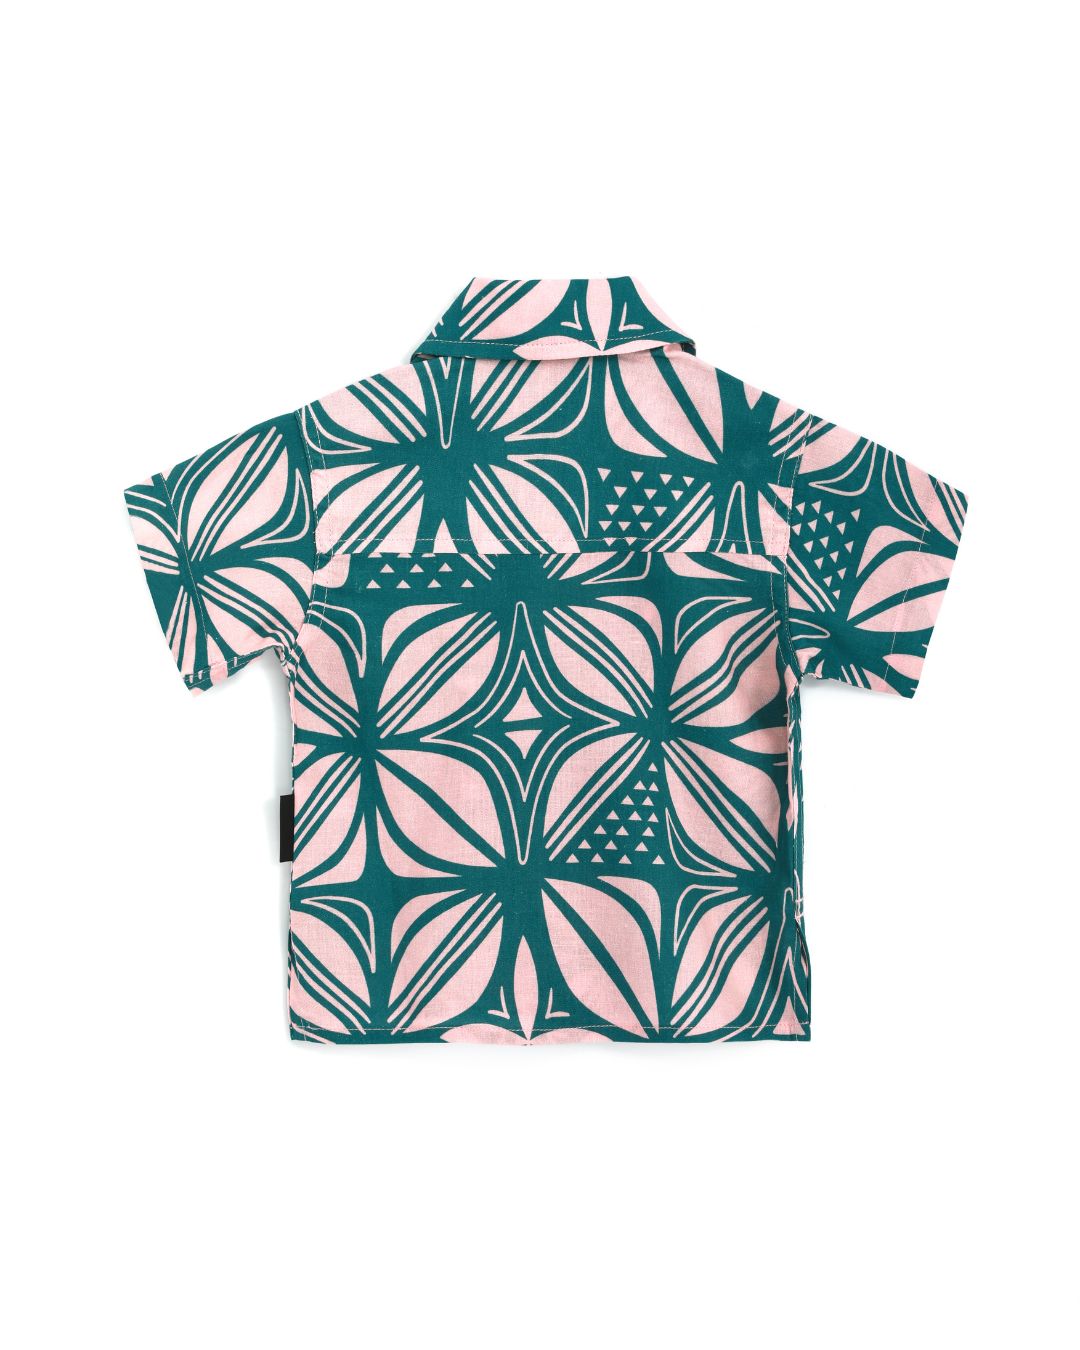 Kanoa Teen Short Sleeve Island Shirt - Pacific Floral Peach - Back